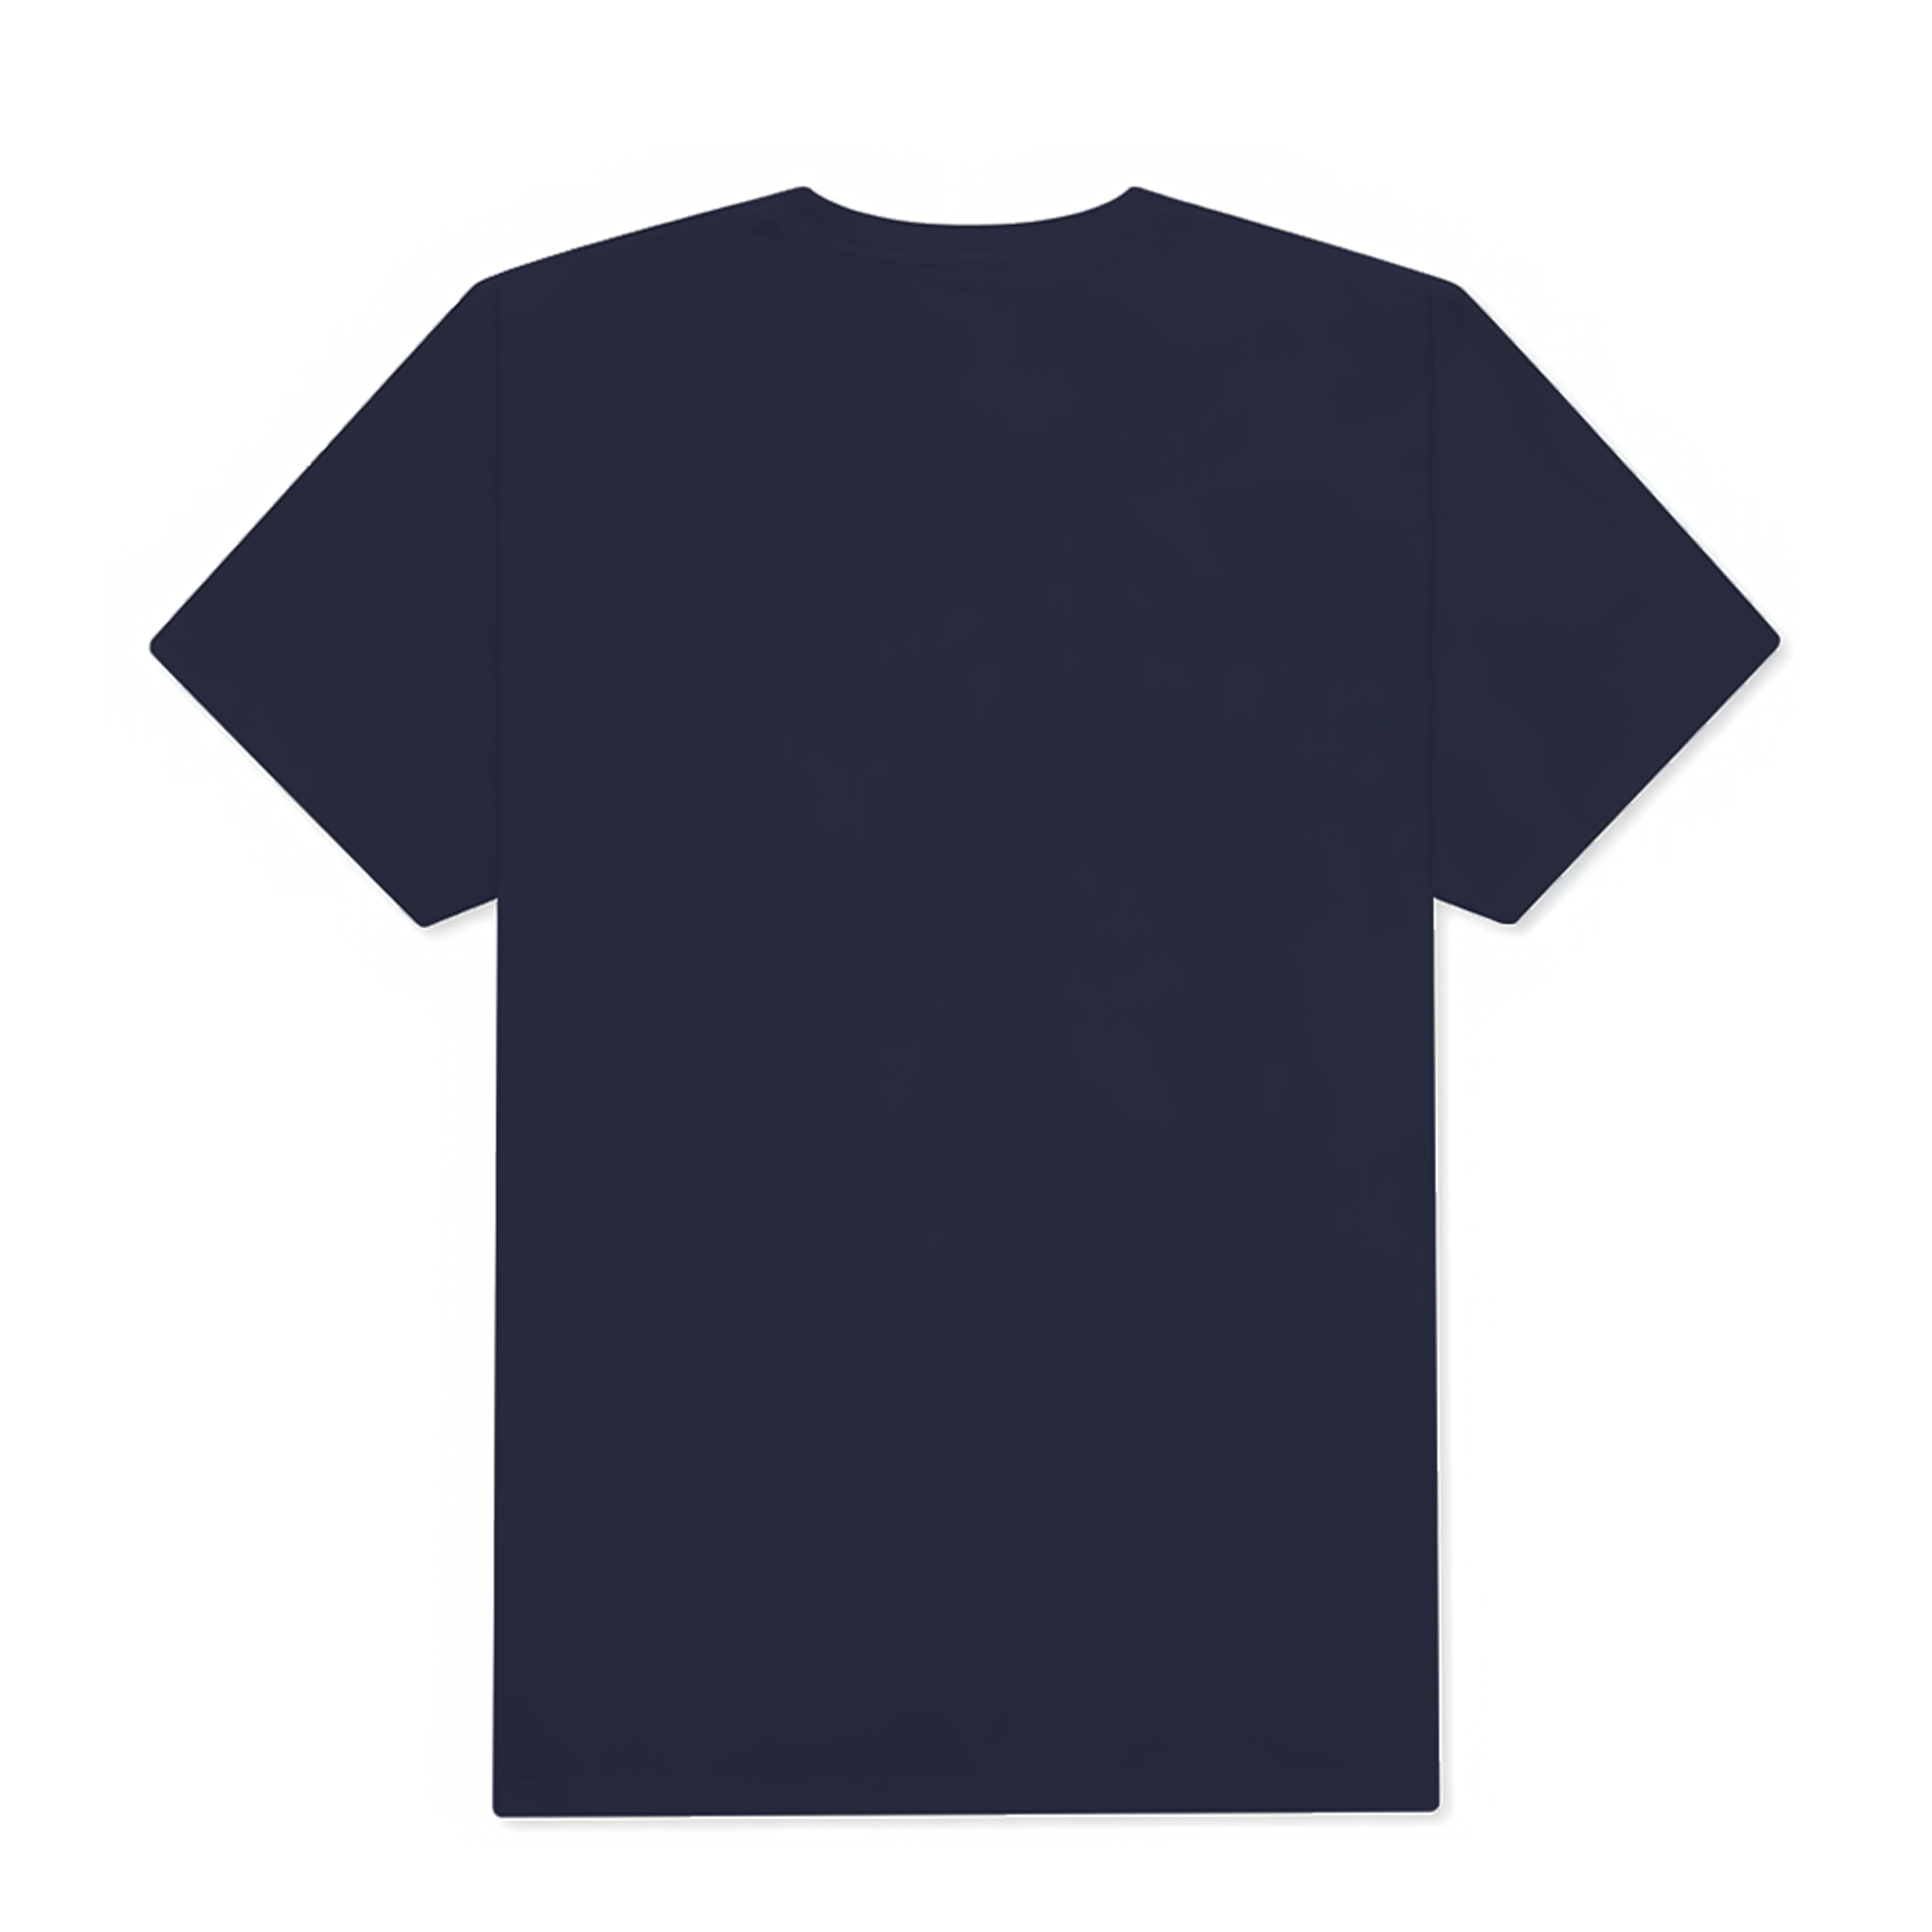 NBA Dallas Mavericks T-Shirt